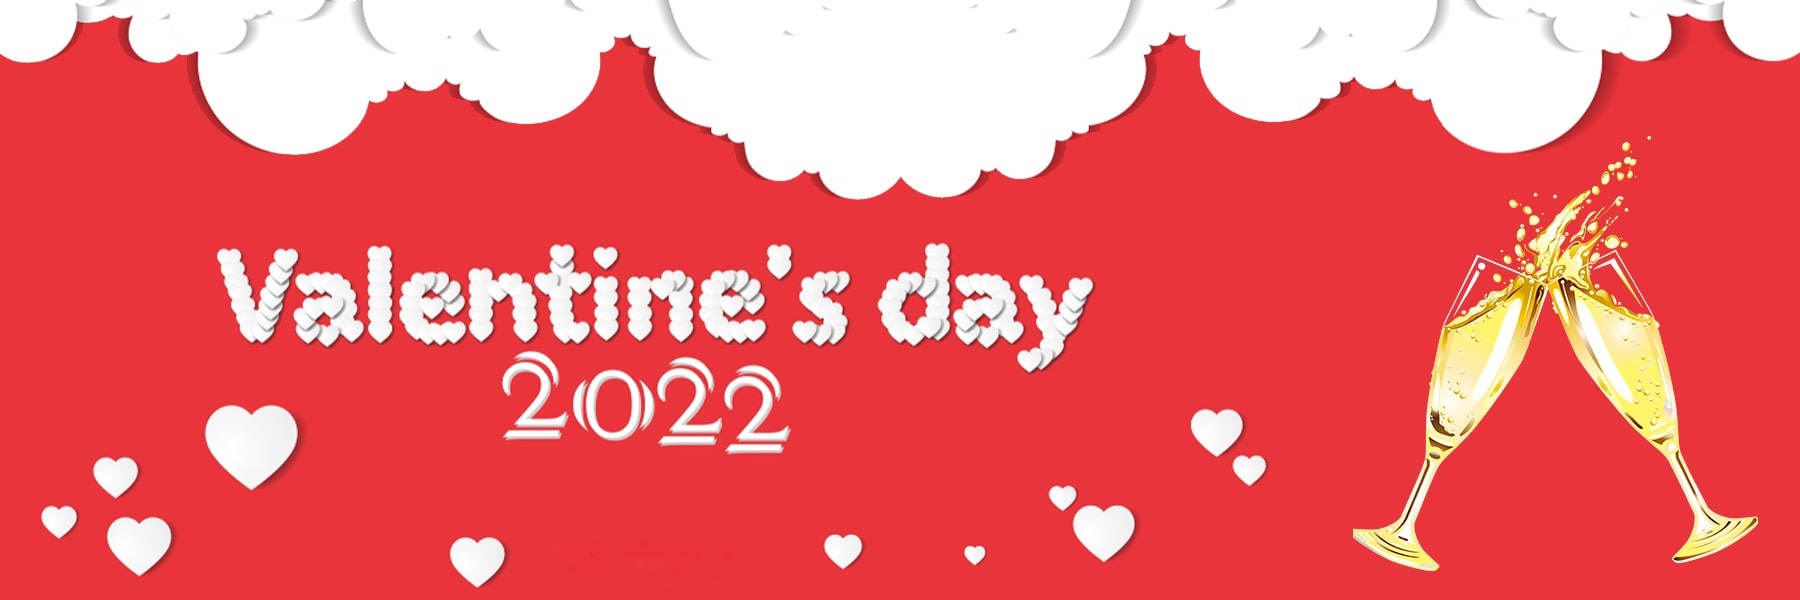 Valentine's Day 2022 - Where to Celebrate in Gwalior